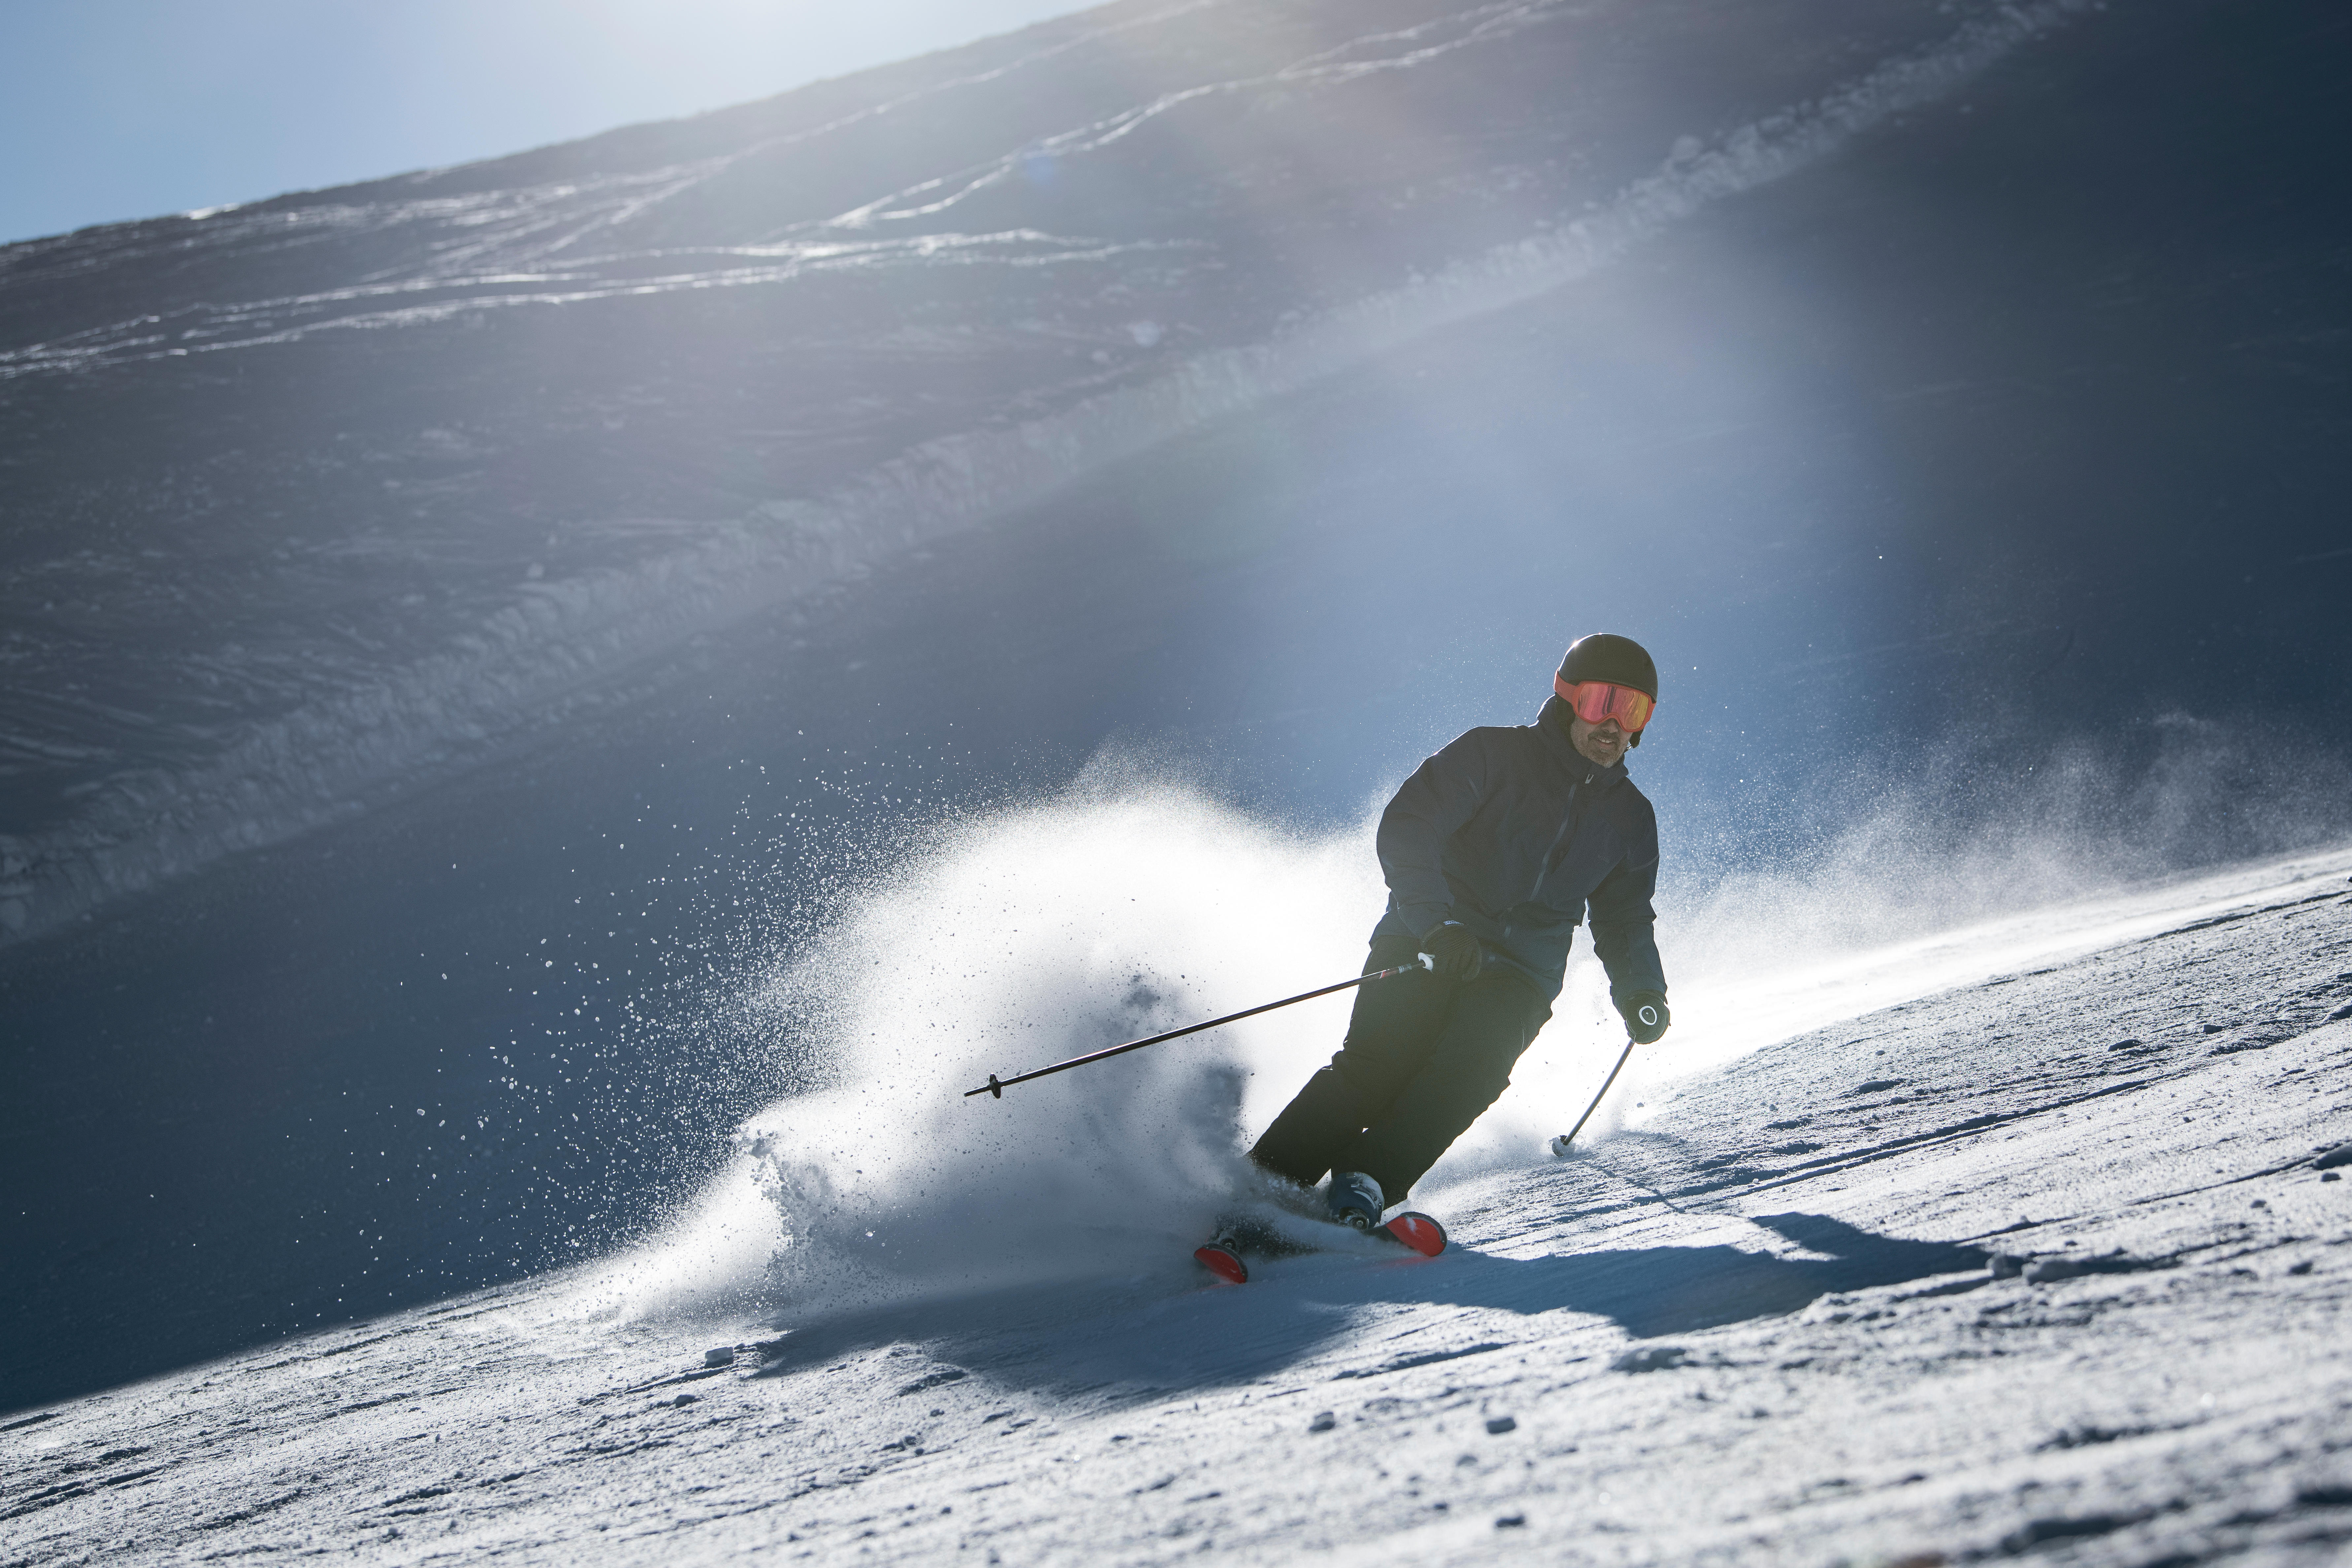 Skis alpins avec fixations homme – Cross 550+ noir - WEDZE